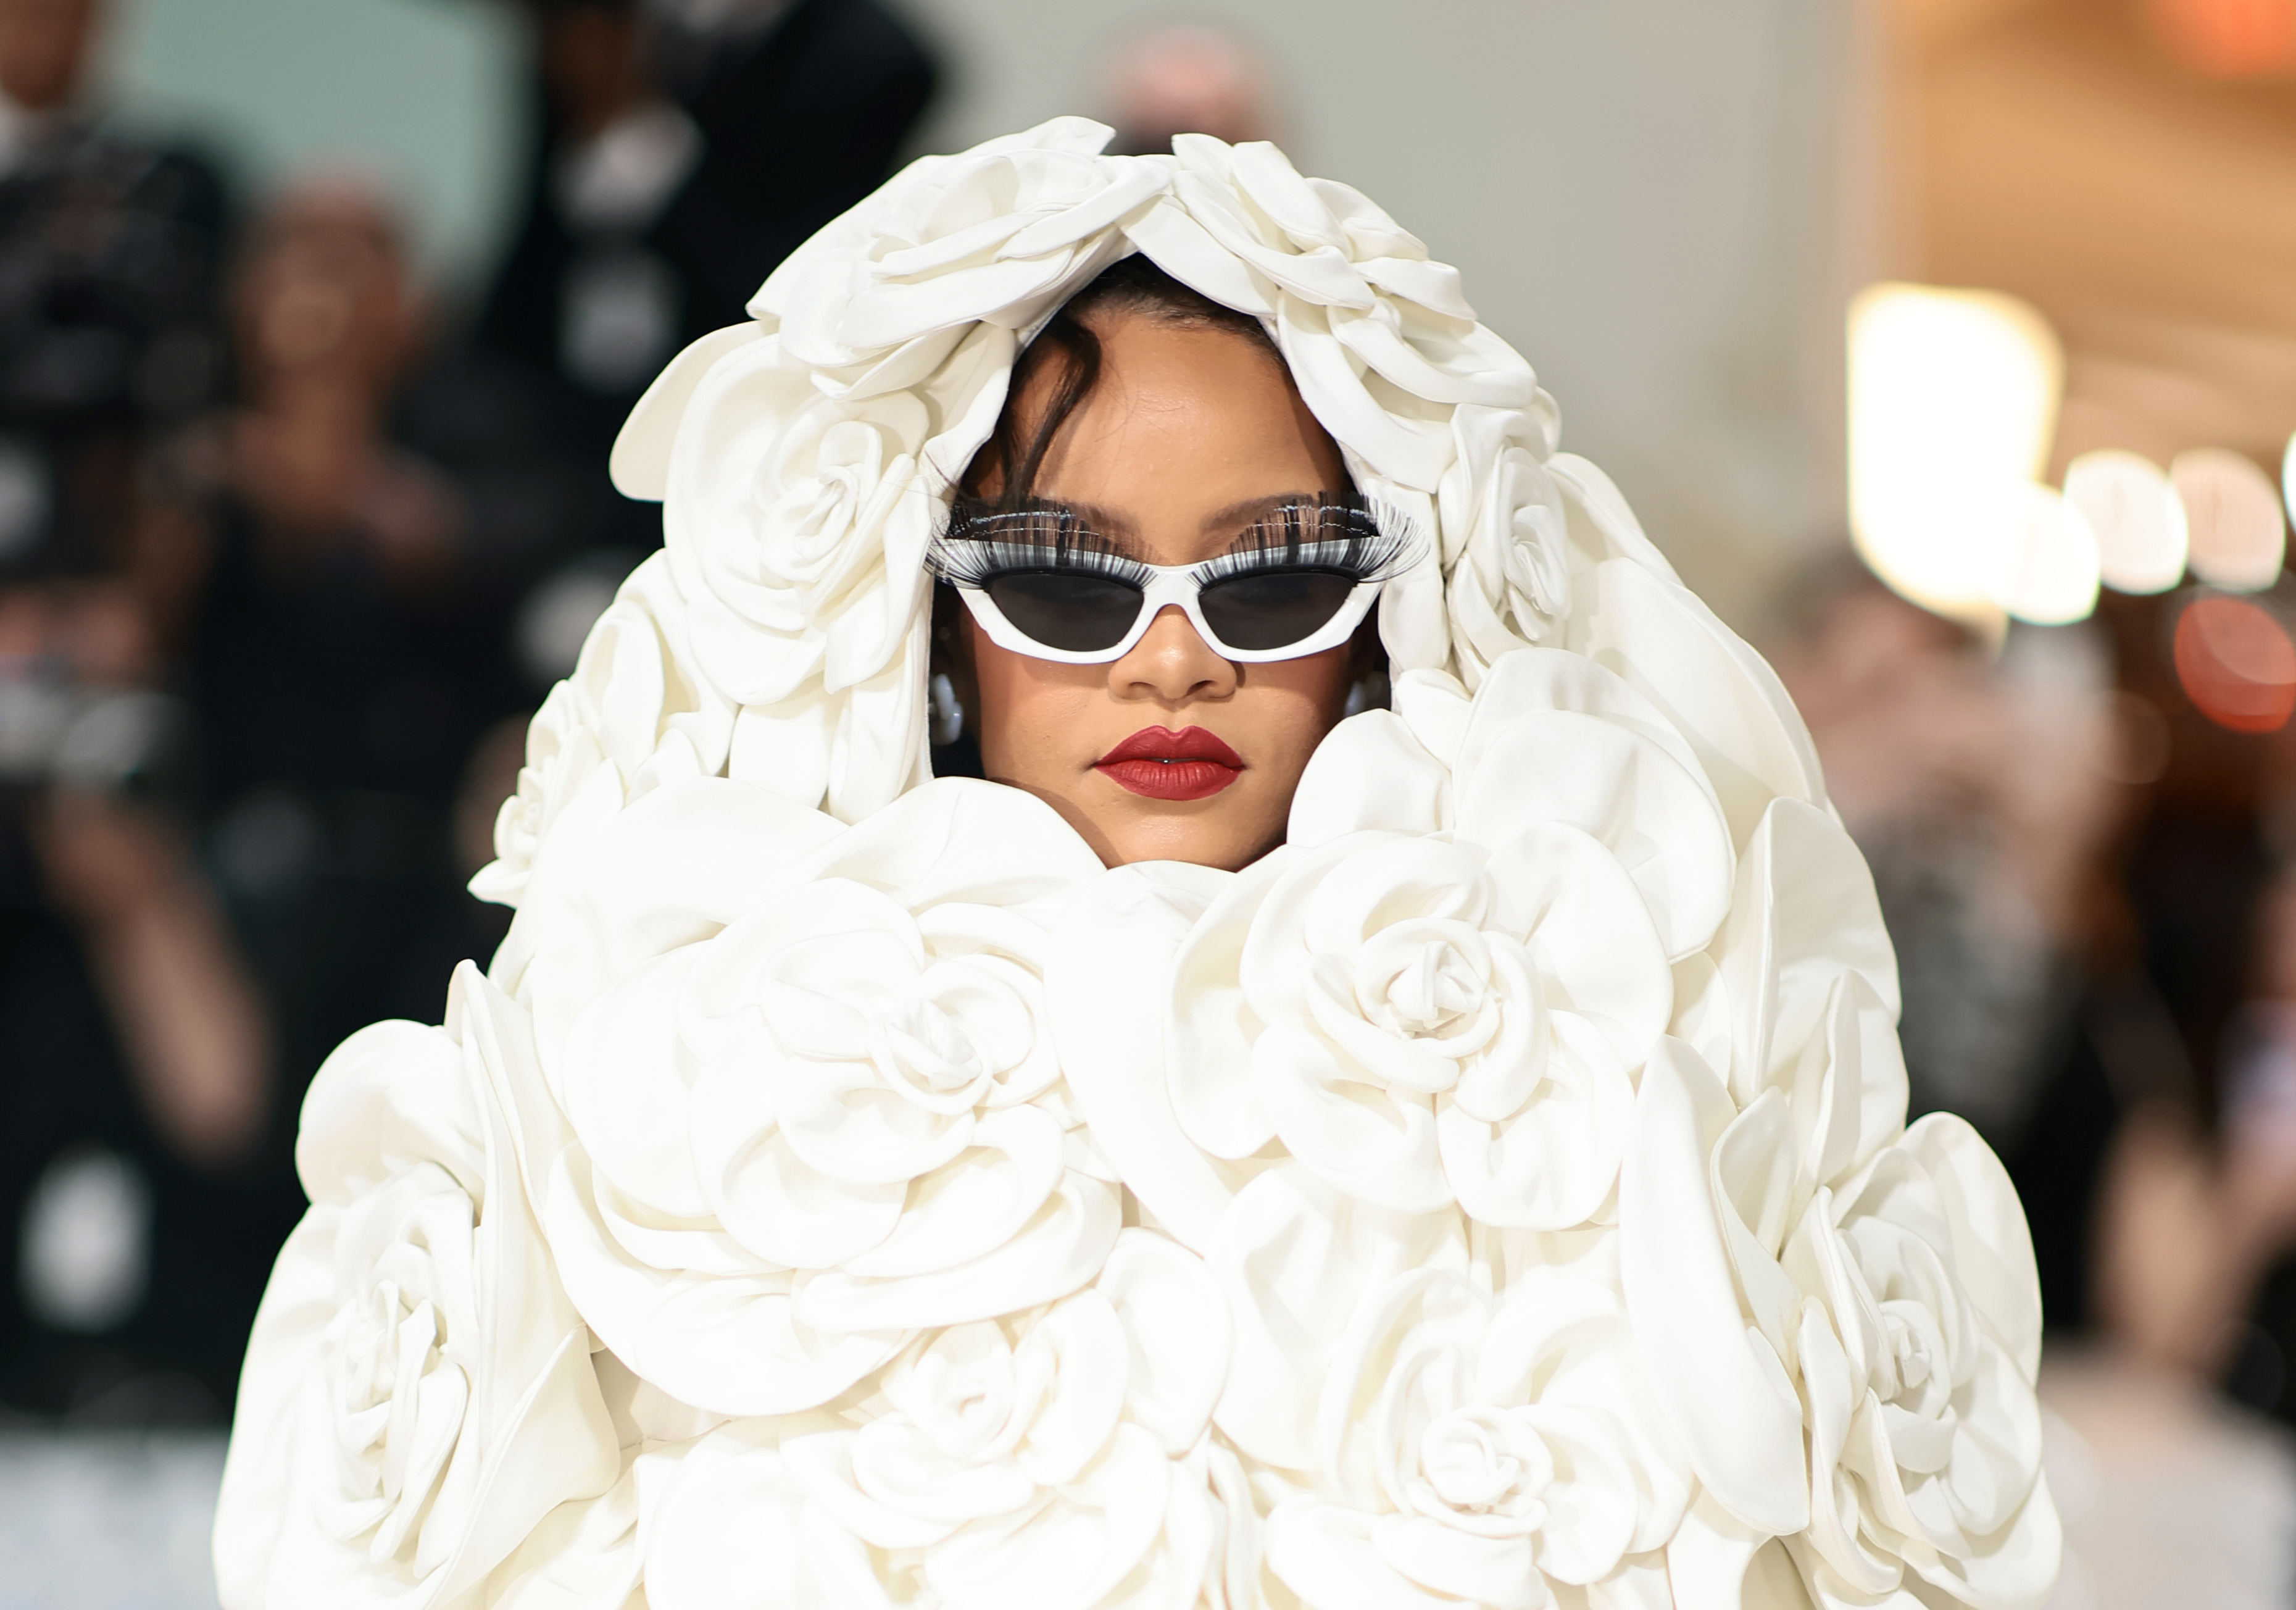 Rihanna bei der Met Gala 2023 zur Feier von "Karl Lagerfeld": A Line of Beauty" im Metropolitan Museum of Art in New York am 1. Mai 2023 | Quelle: Getty Images